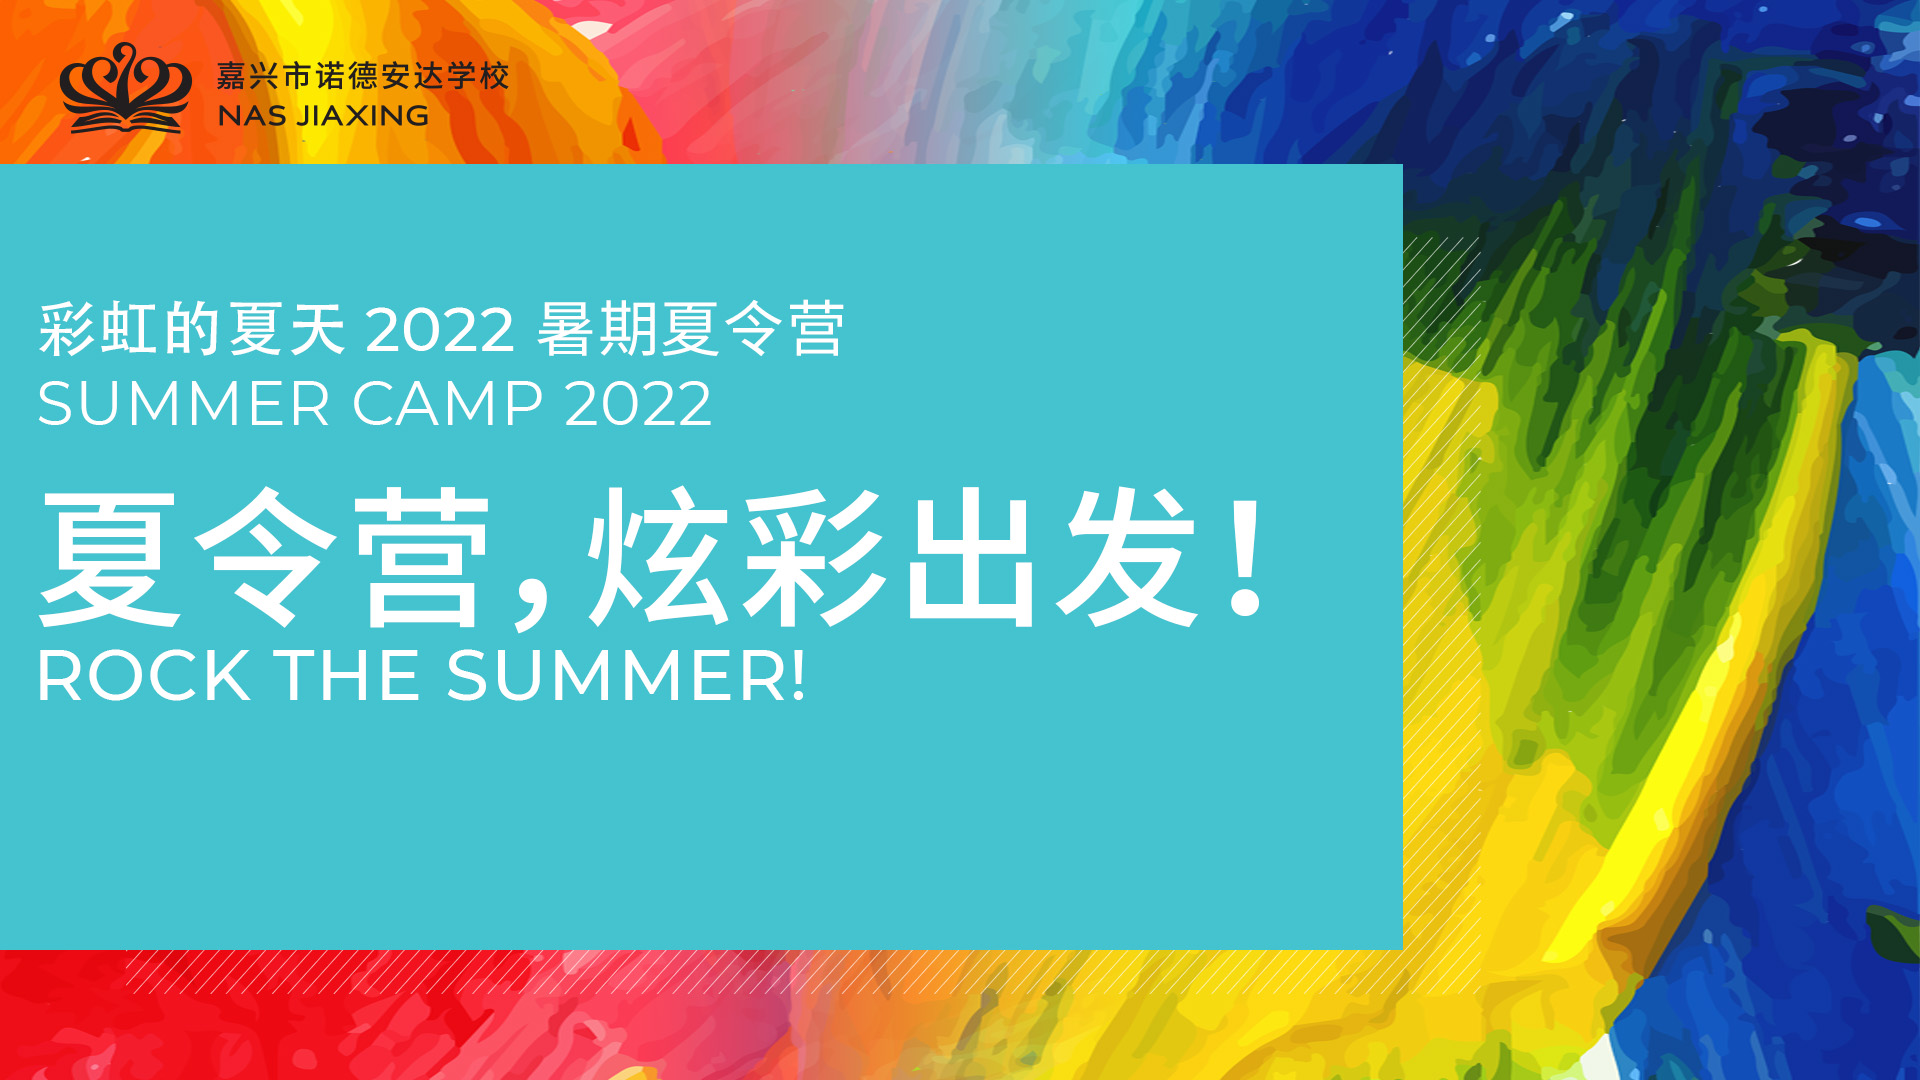 summercamp - summercamp